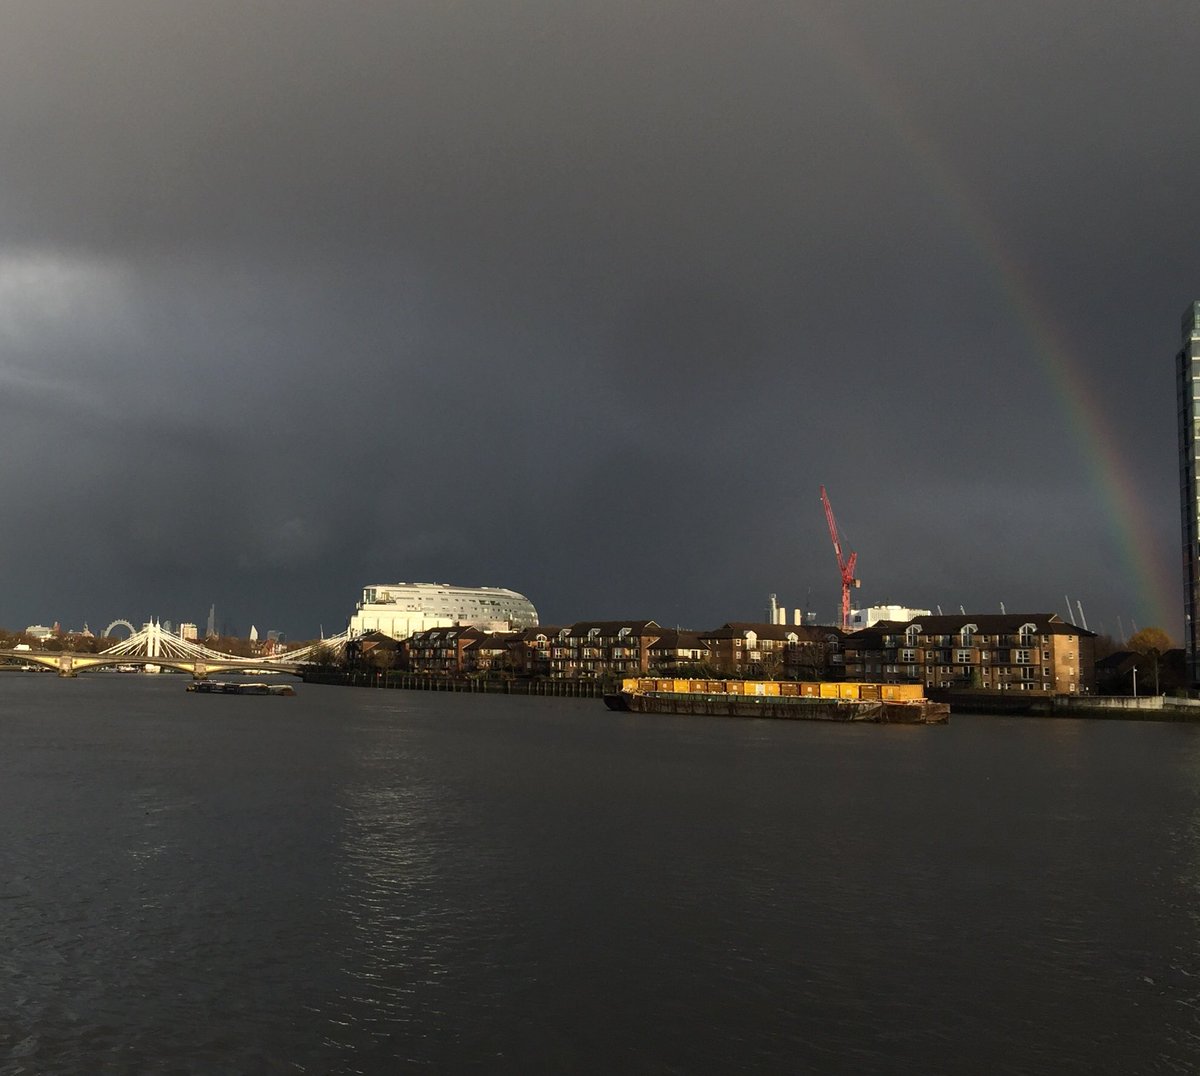 #Riverthames under the #rainbow and on the left, #Batterseabridge #Albertbridge and the #Londoneye on the background #Londonlockdown